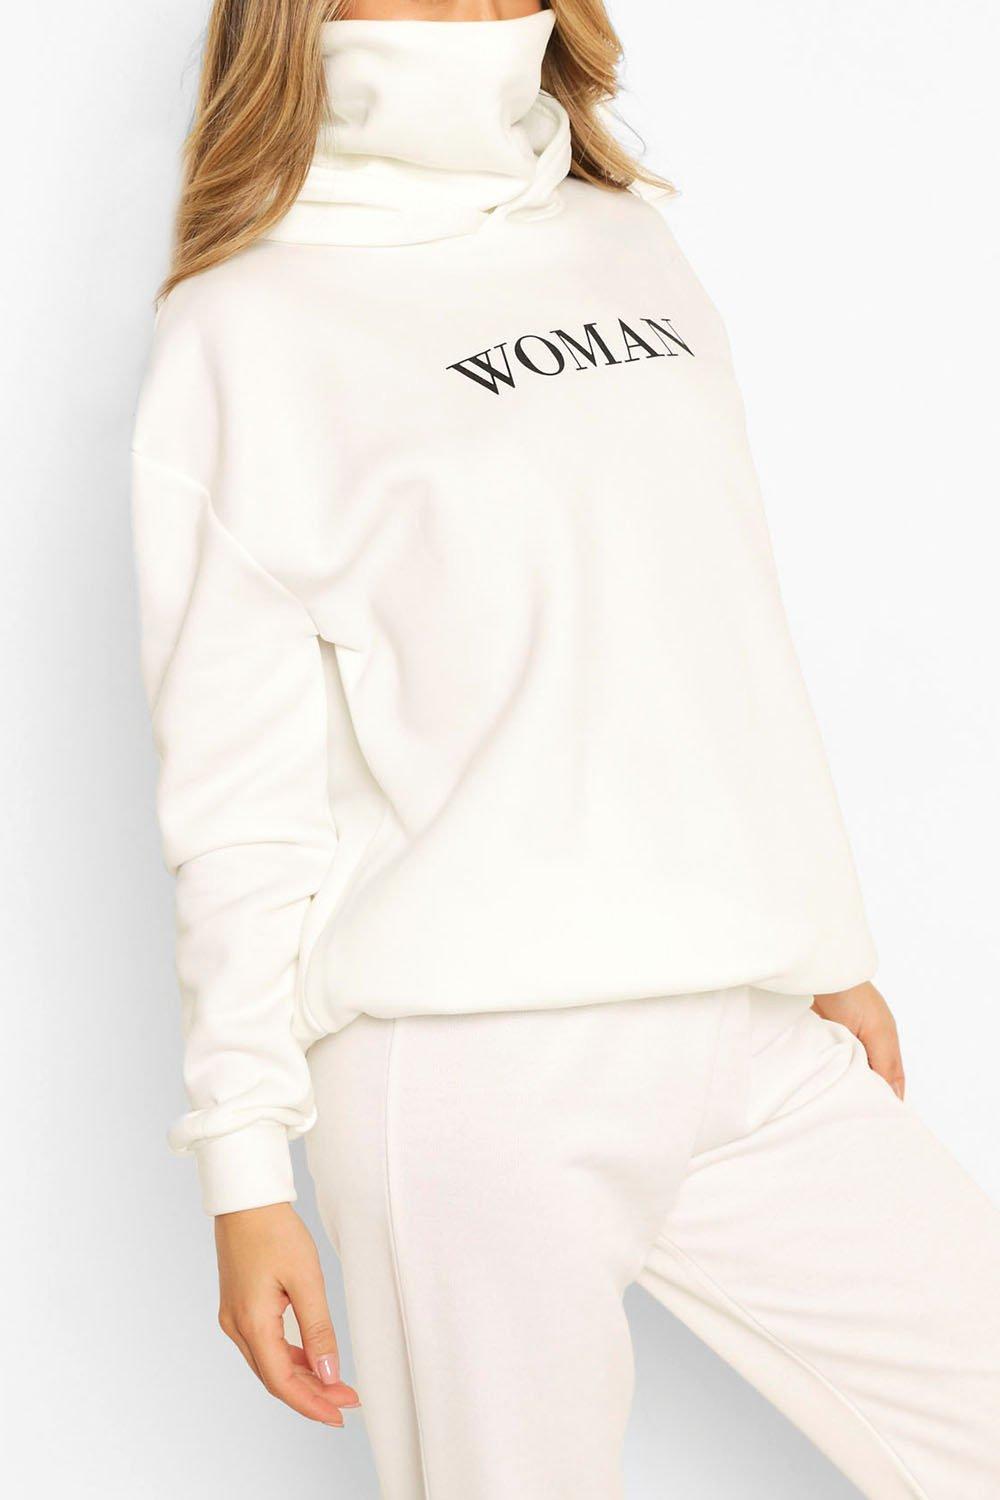 white slogan hoodie